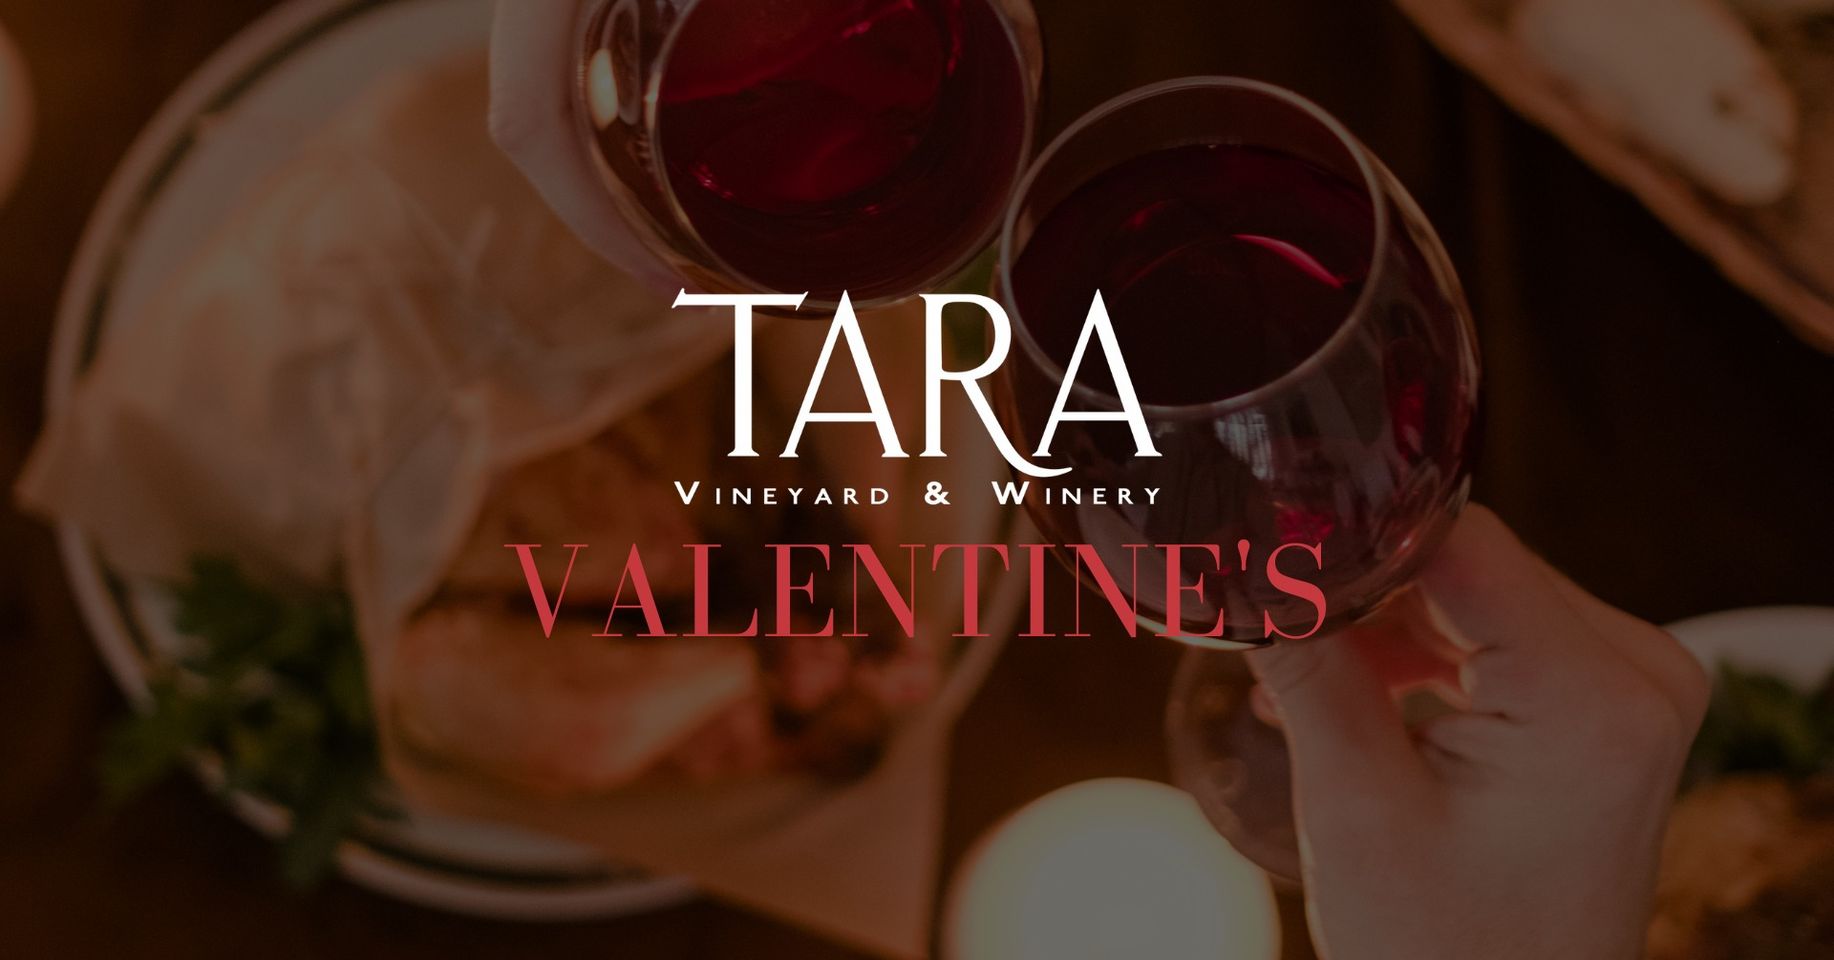 Tara Winery Valentines Dinner 1 tara valentines cedarcreeklake.online